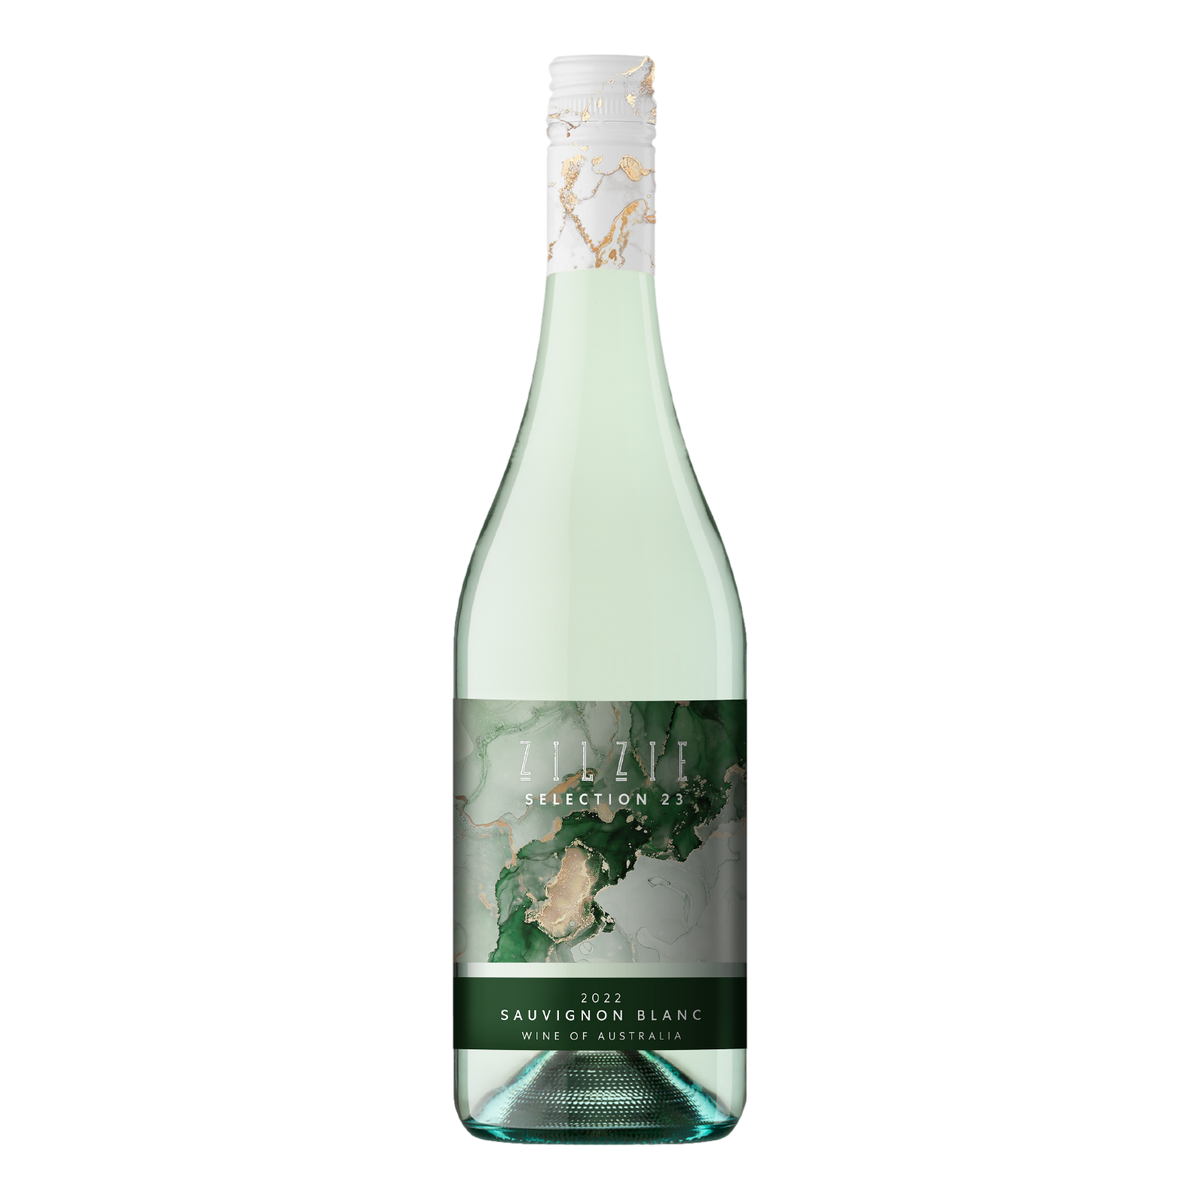 Zilzie Selection 23 Sauvignon Blanc